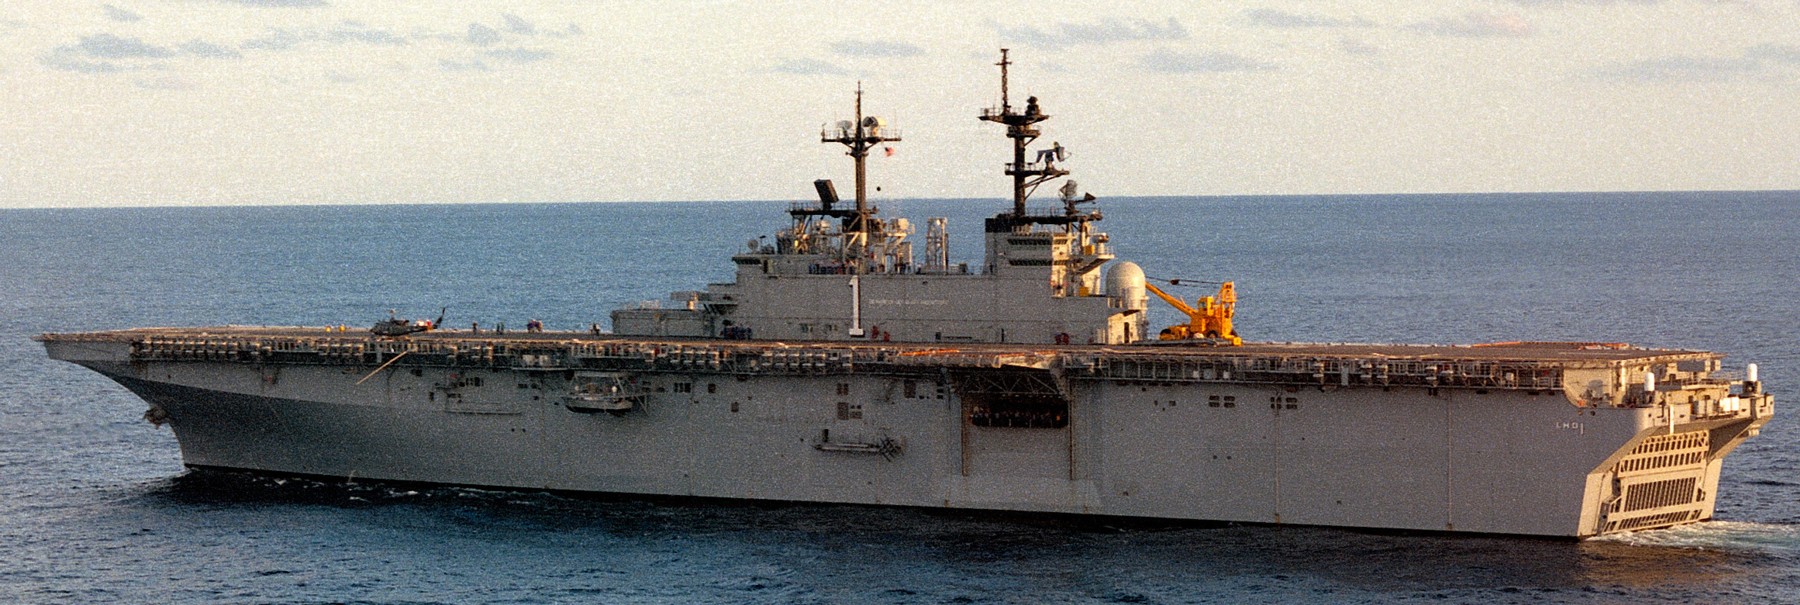 lhd-1 uss wasp amphibious assault landing ship dock helicopter us navy 47